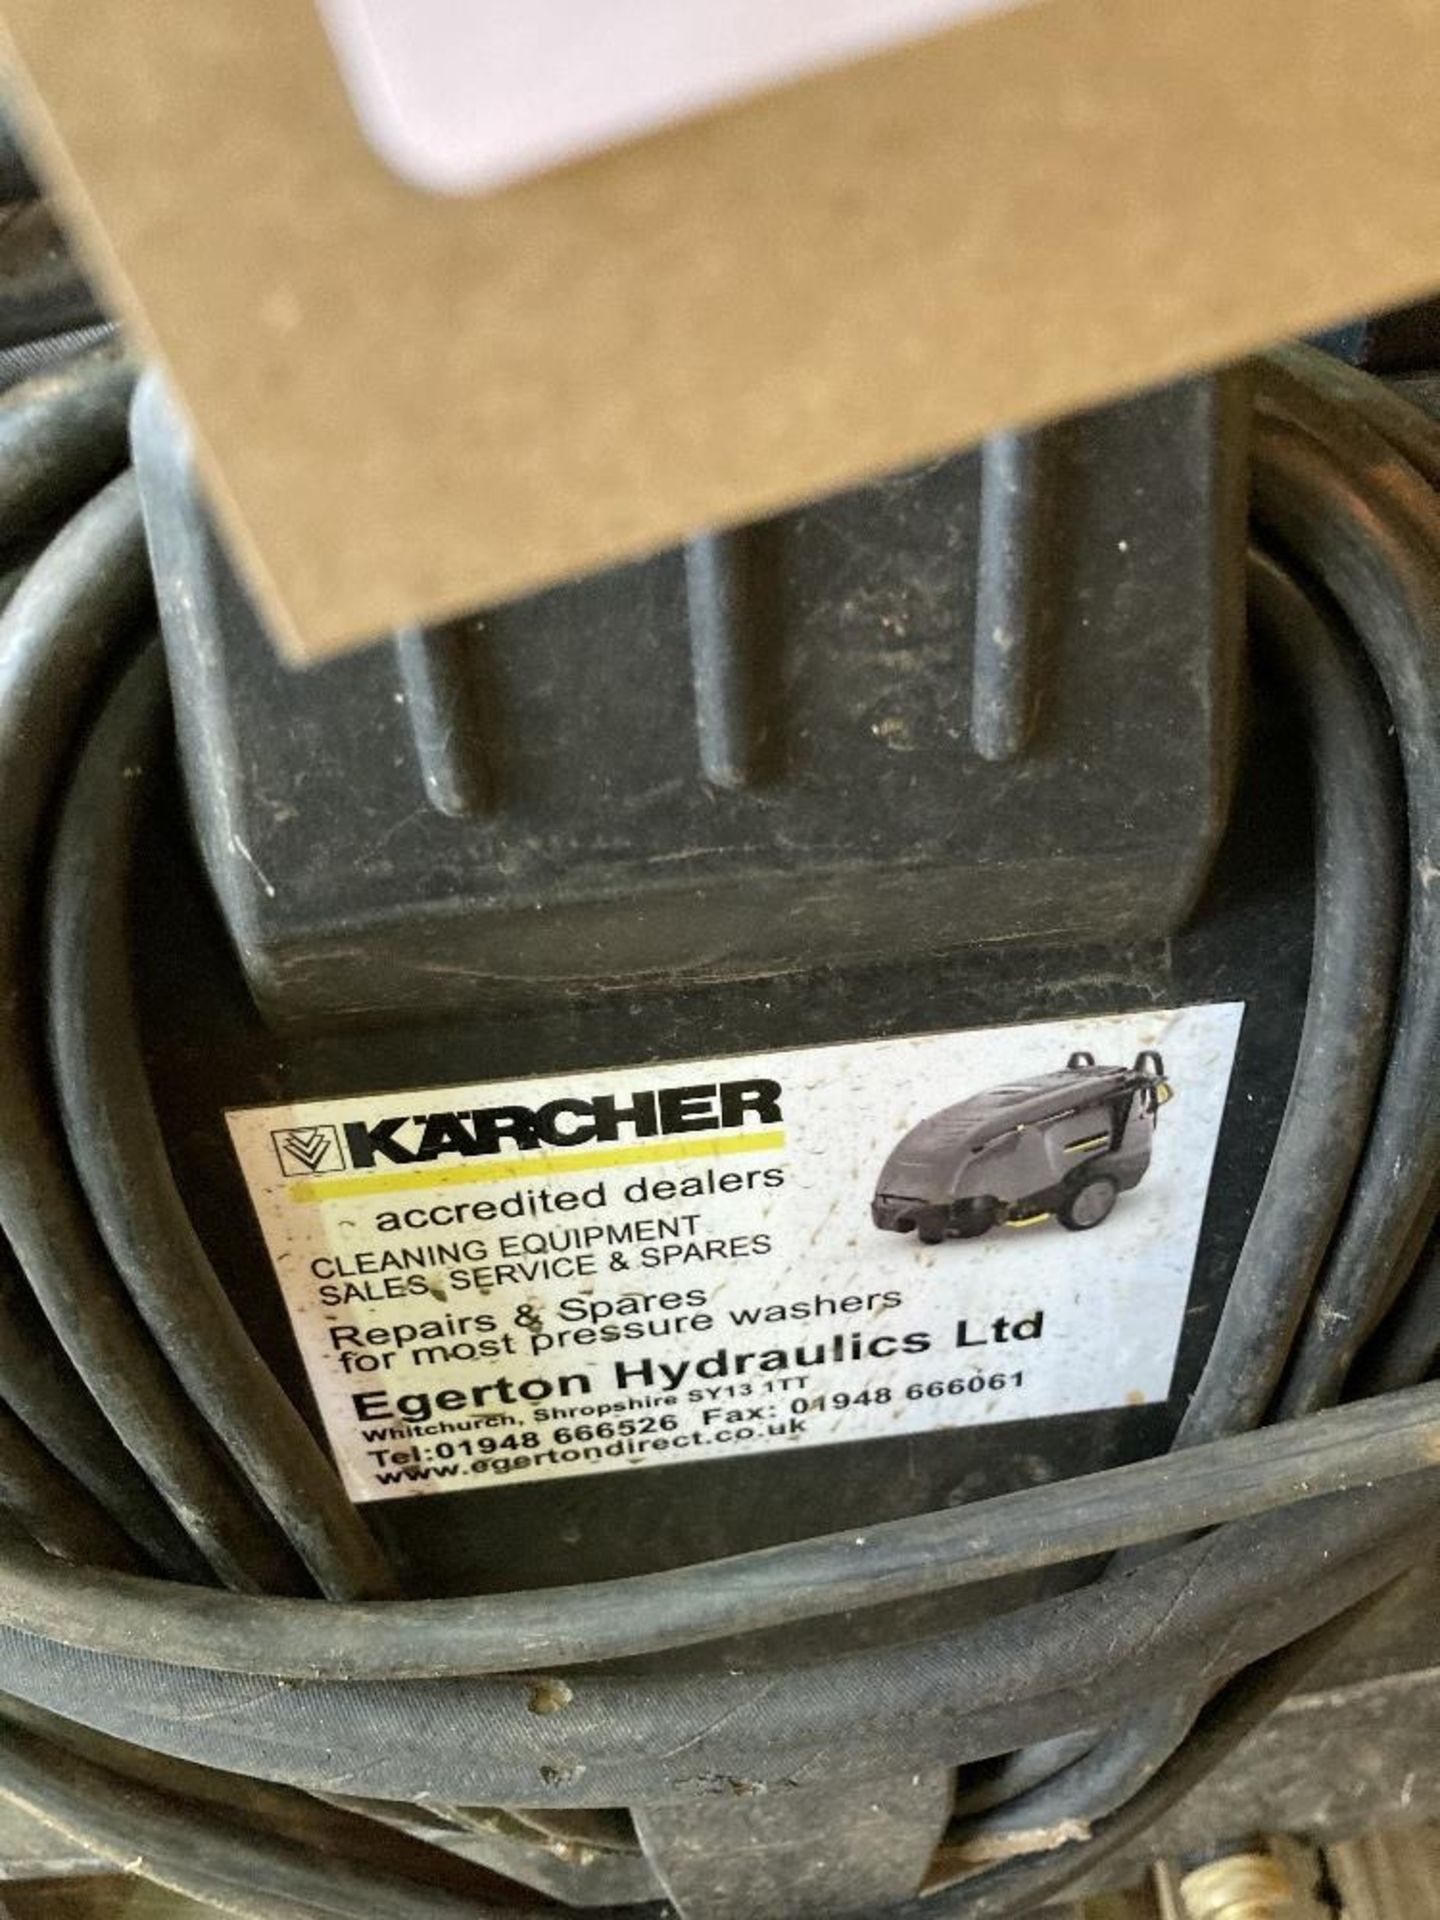 Karcher Professional HDS 6/12C Hot Water & Steam Pressure Washer 240V - Image 2 of 3